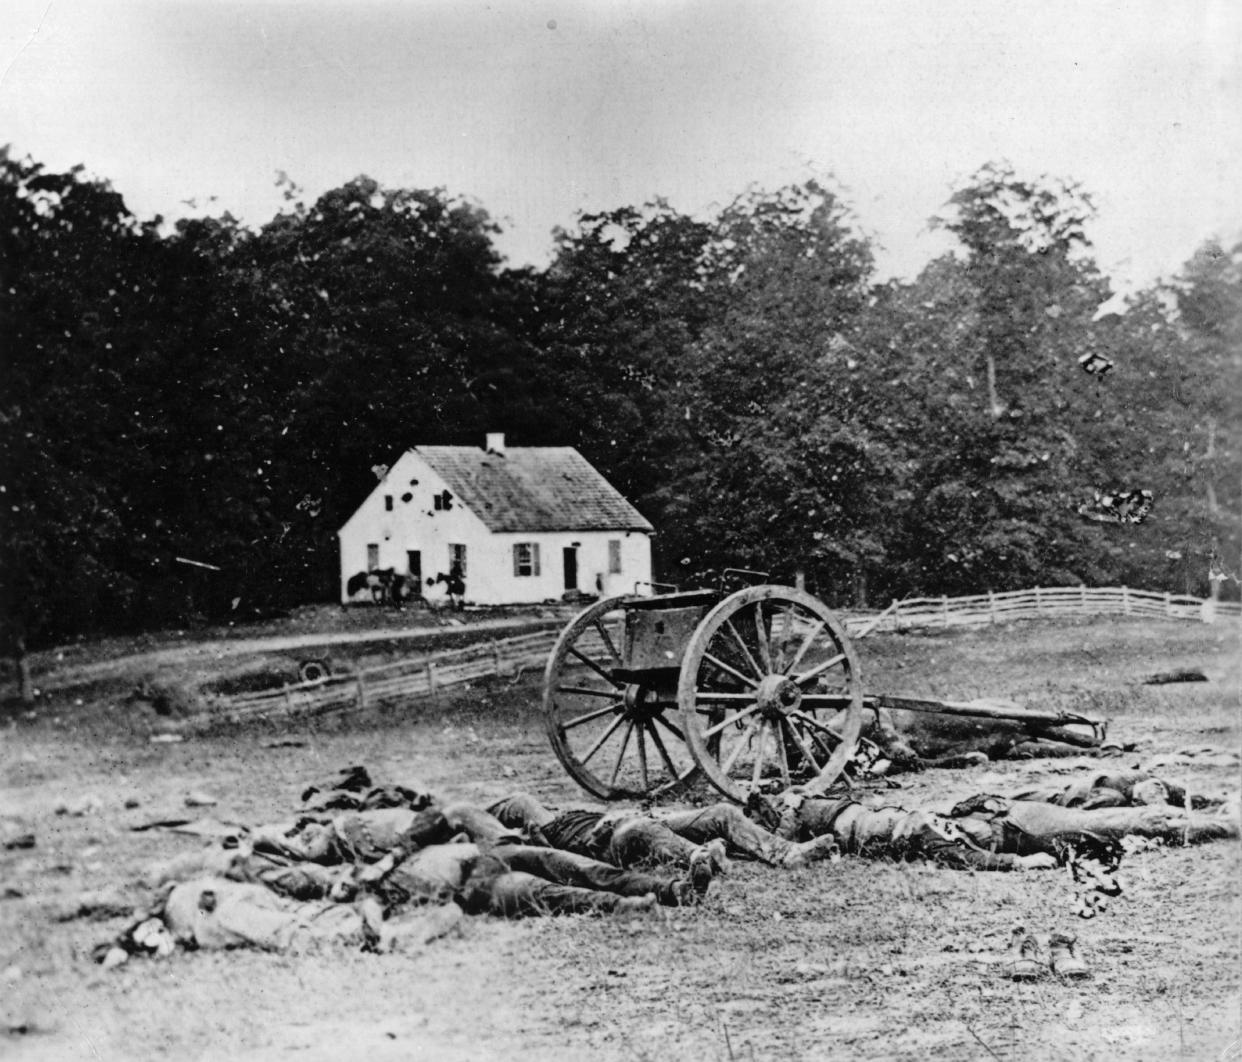 Battle Of Antietam